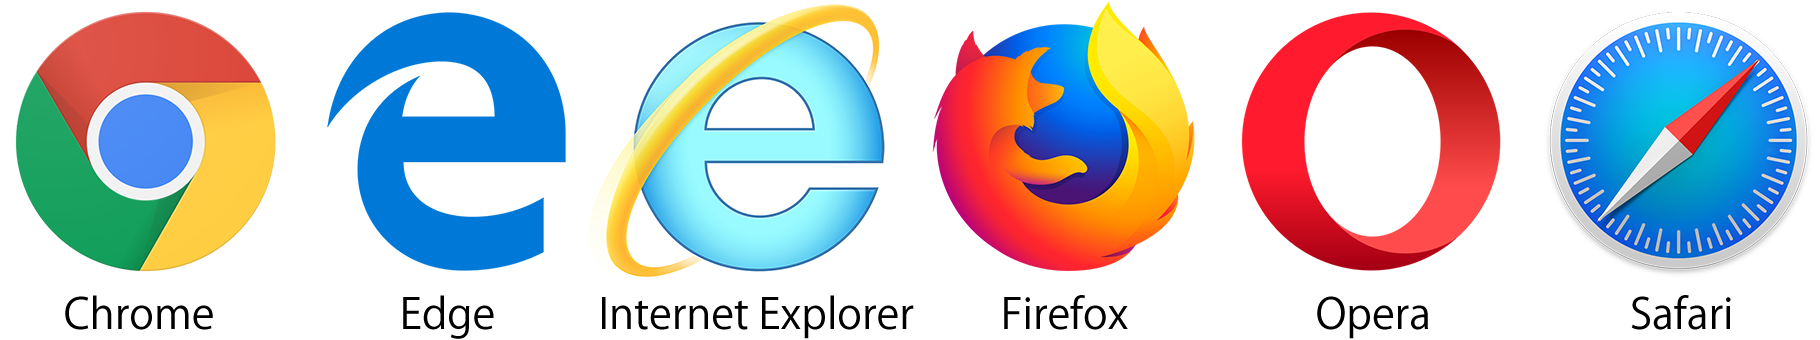 Chrome・Edge・Internet Explorer・Firefox・Opera・Safari